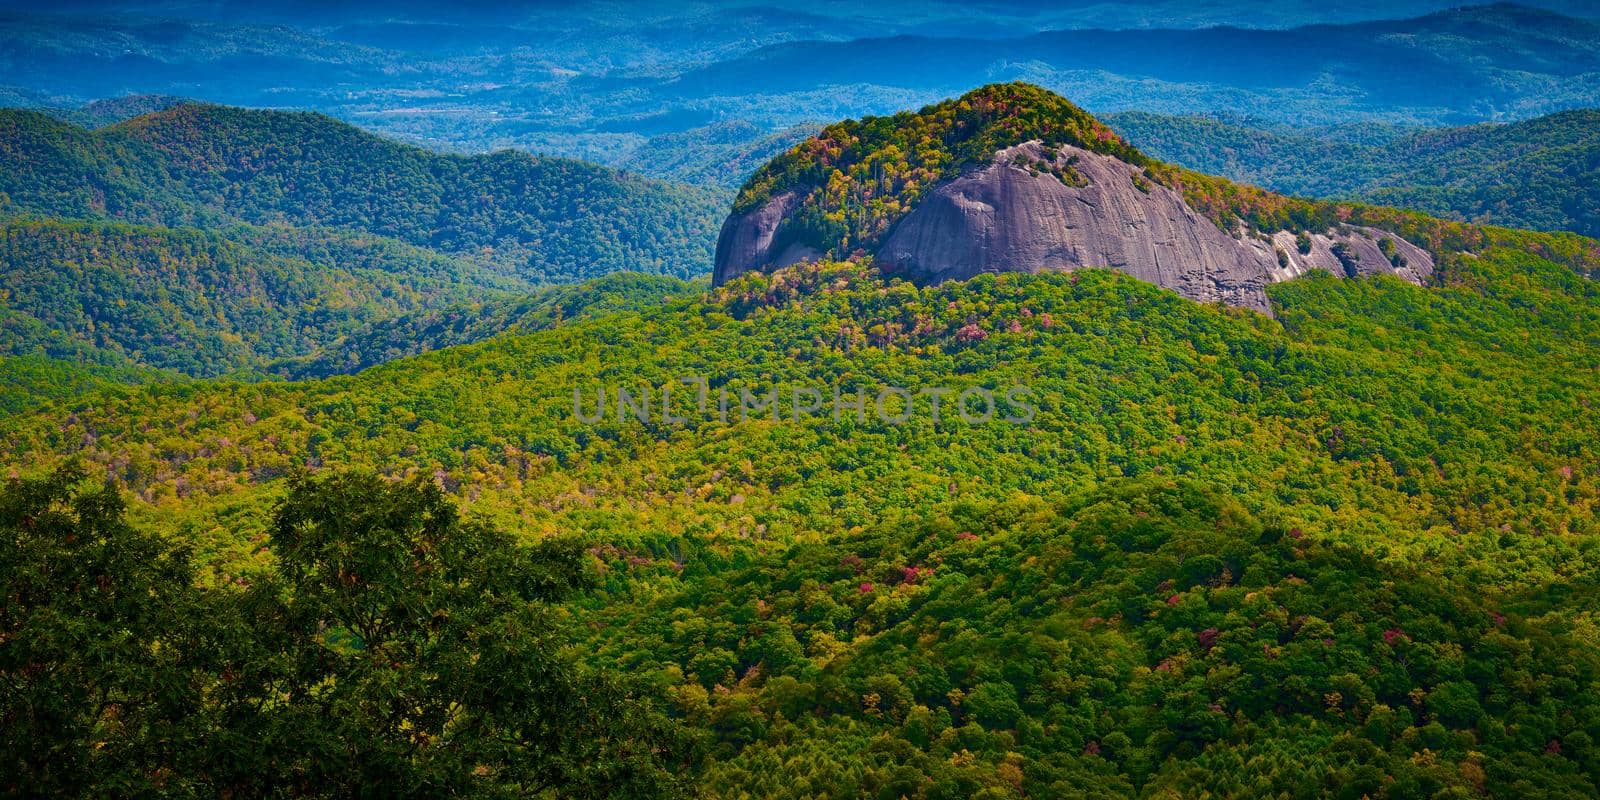 Looking Glass Rock in Pisgah National Forest, North Carolina, USA at early fall season.